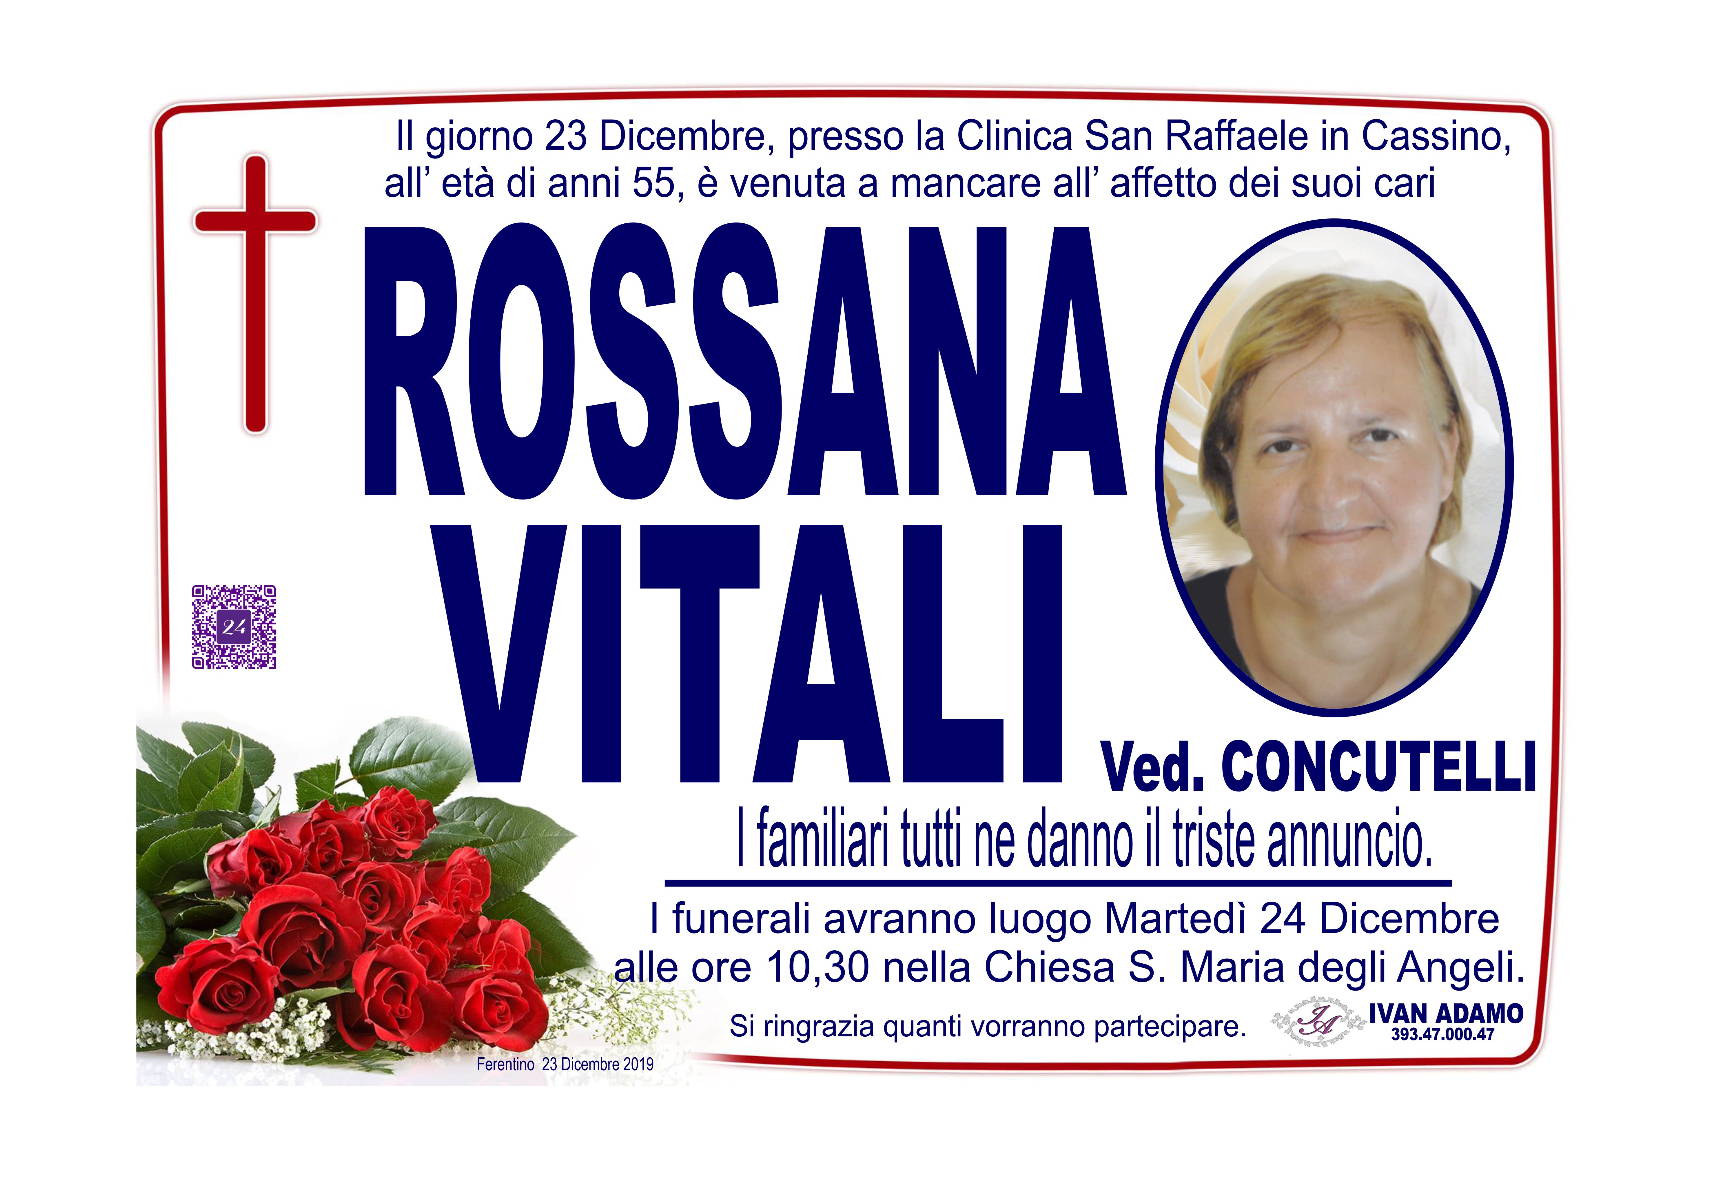 Rossana Vitali